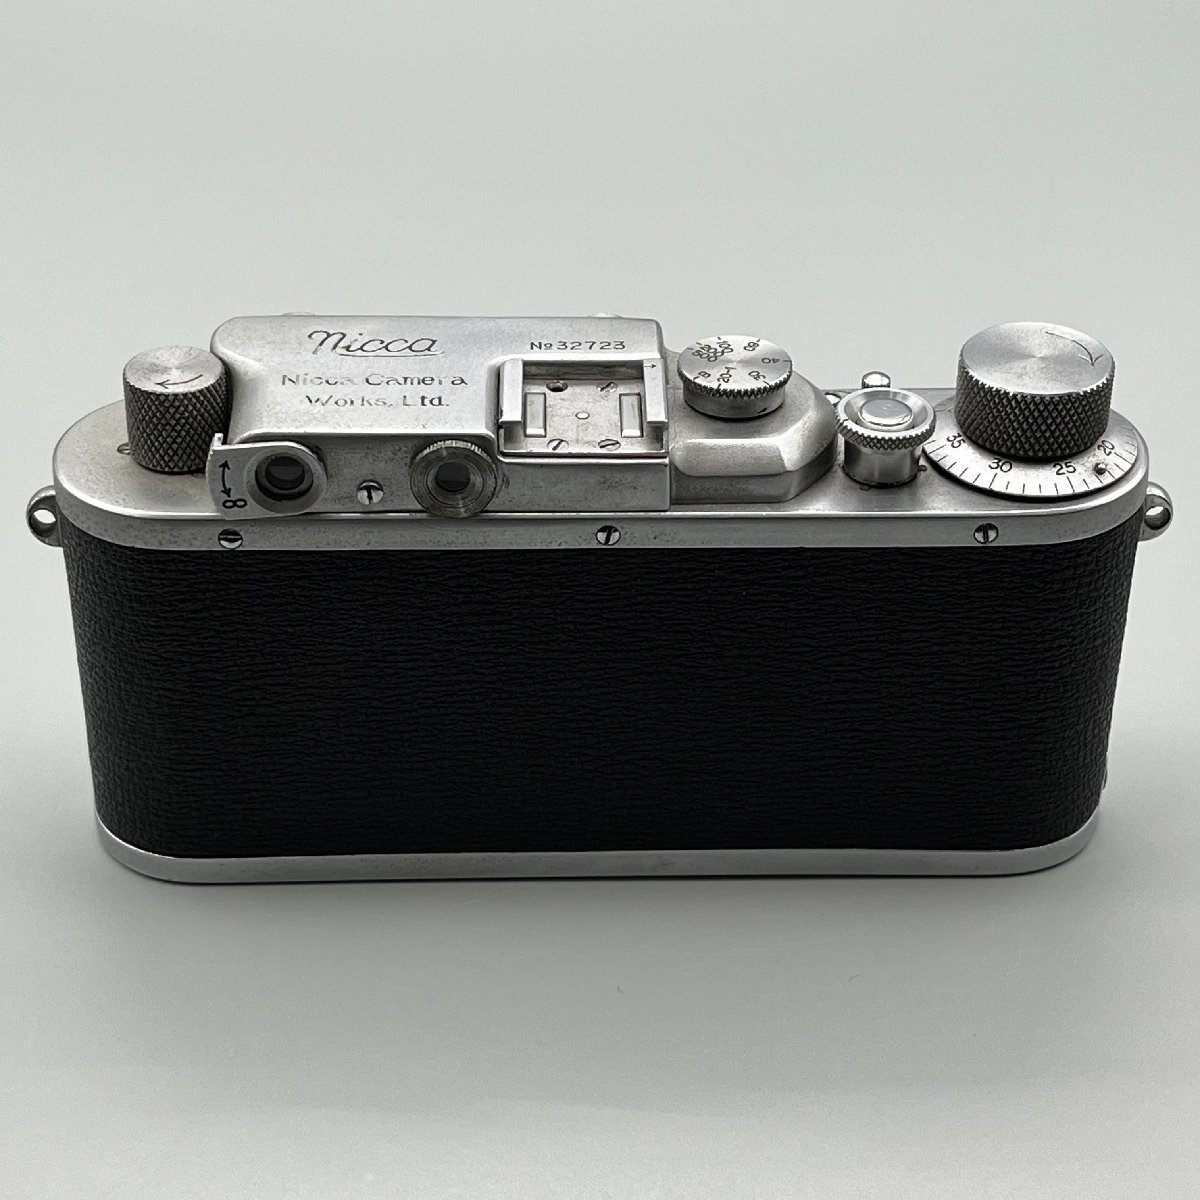 Nicca Type-3B Nicca Camera Company, Ltd. ニッカ ⅢB型 ニッカカメラ Leica ライカ Lマウント ジャンク品の画像5